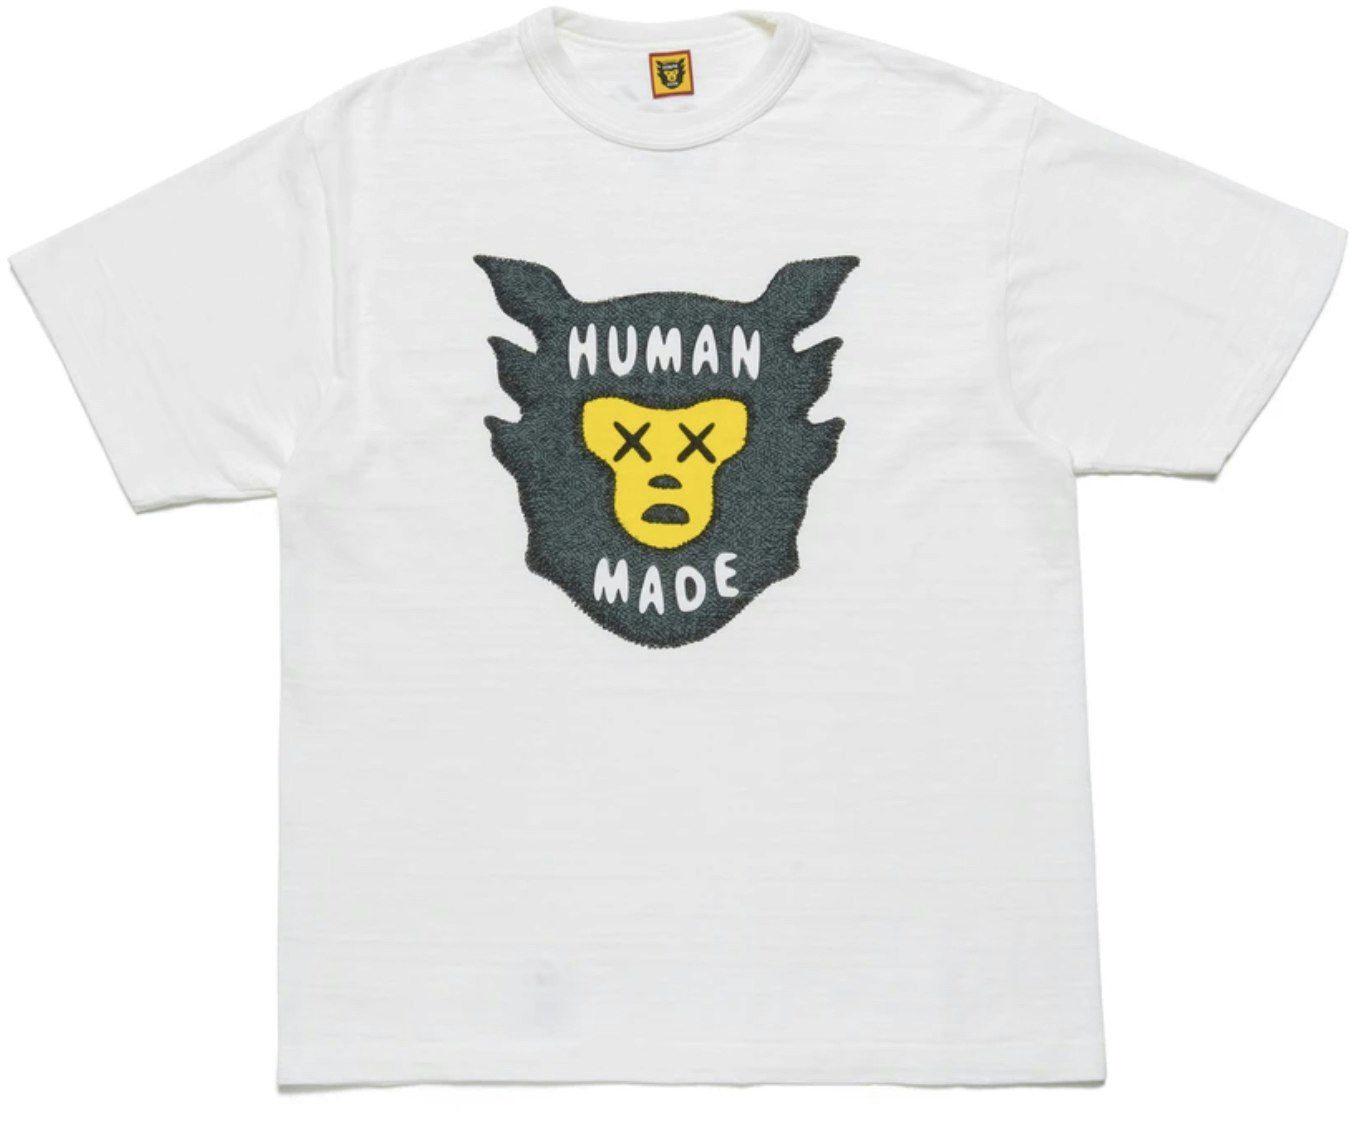 HUMAN MADE x KAWS Made Graphic T-Shirtカラーブラック